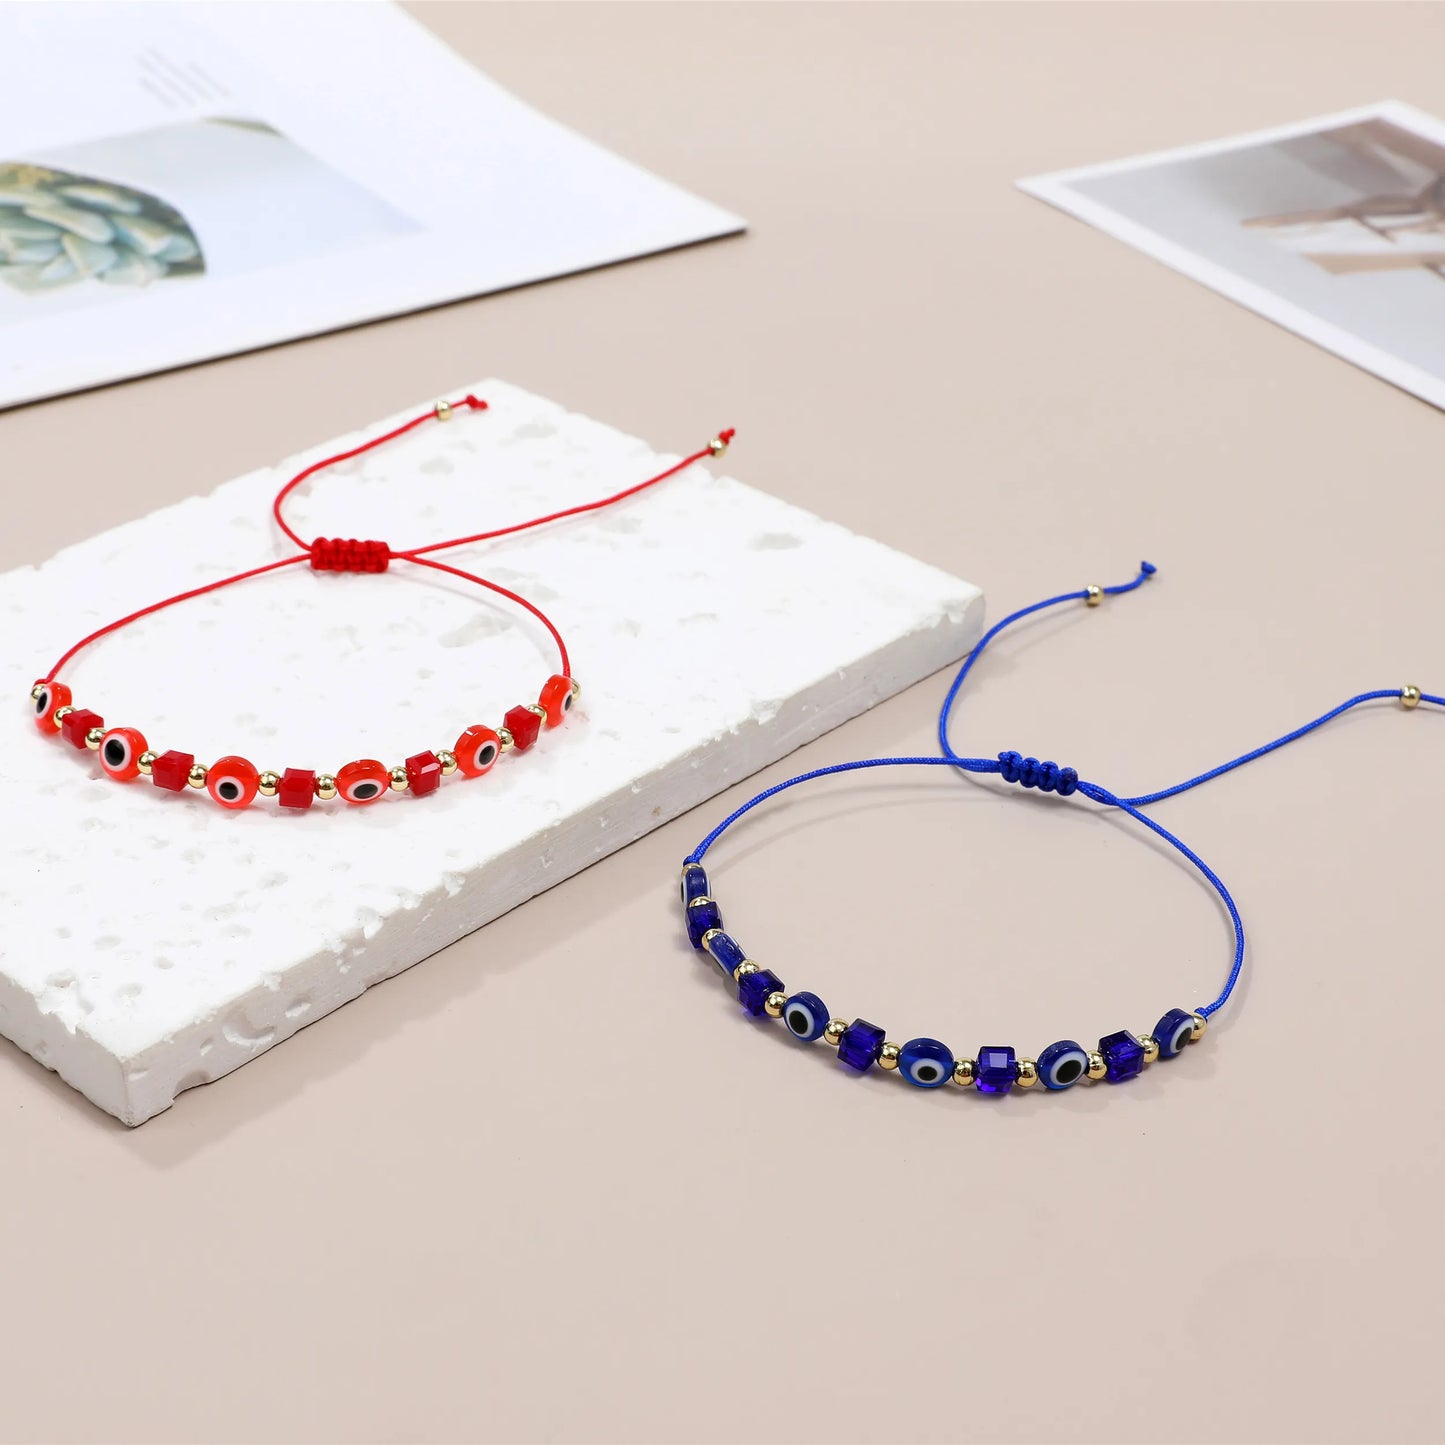 12pcs Colorful Evil Eye Beads Bracelet Handmade Prayer Bangles Adjustable Anklets Wrist Jewelry Gift for Friend Wholesale